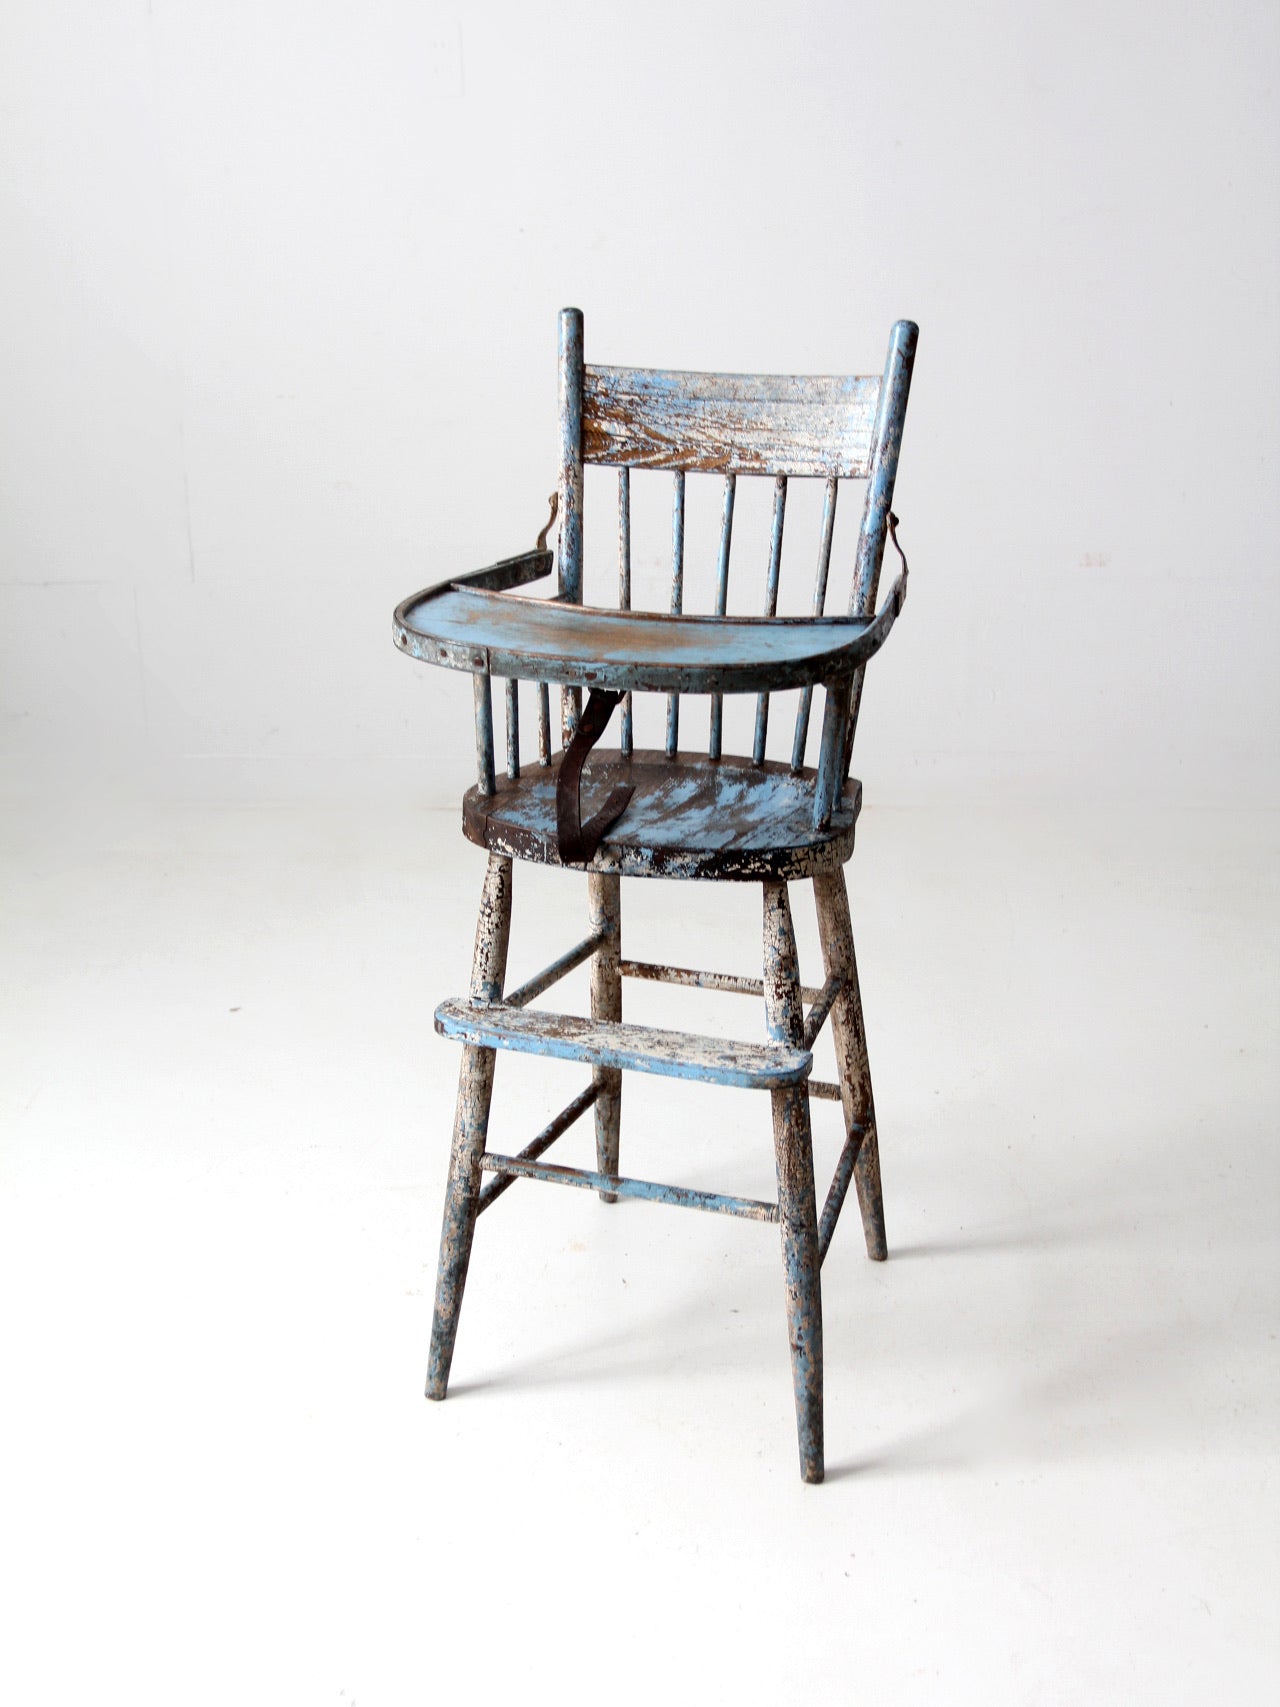 antique decorative children's chair